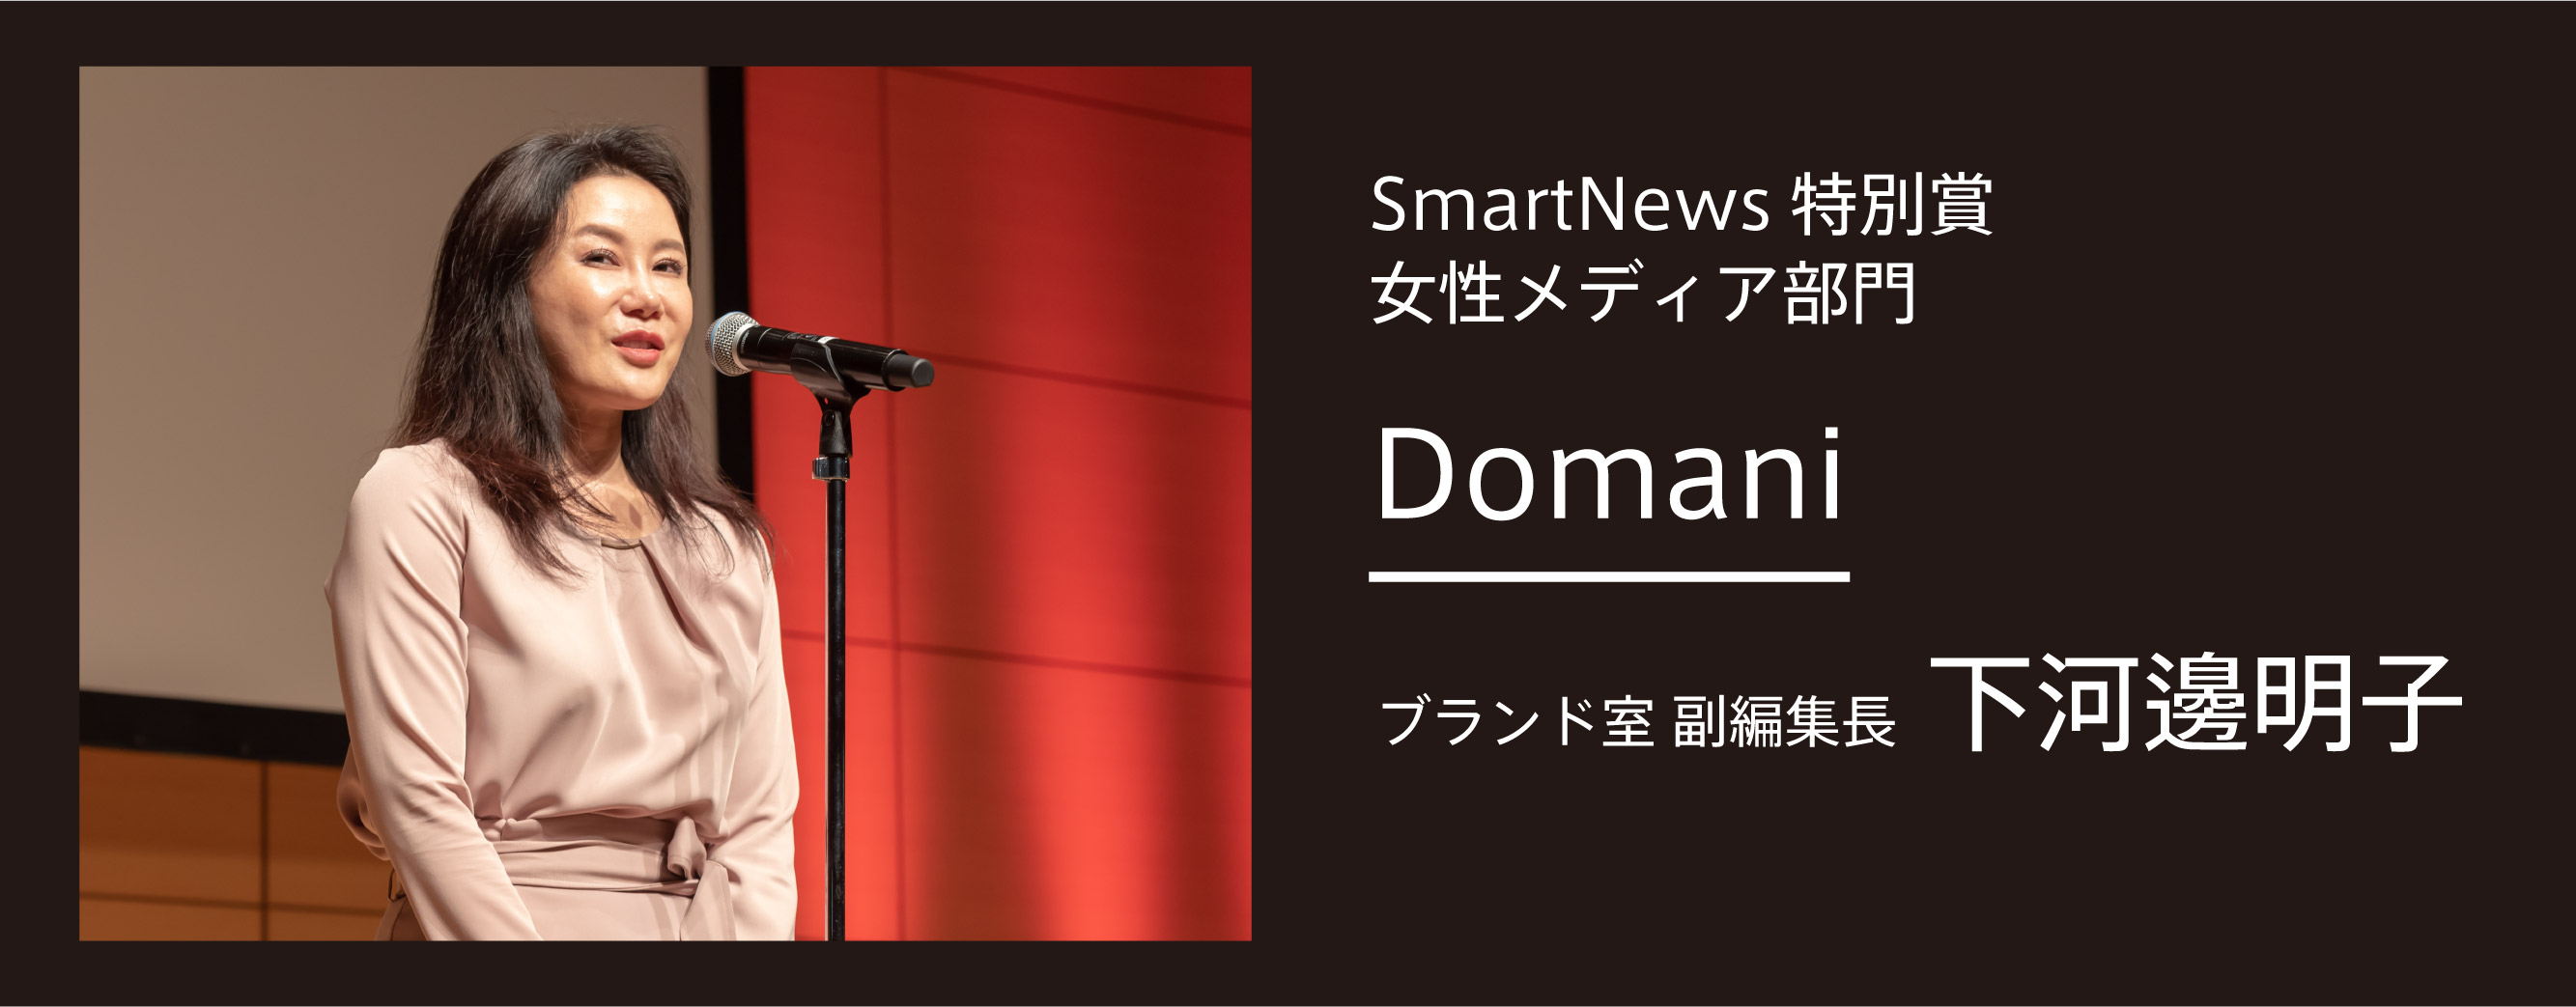 mmp2018-smartnews-award-05